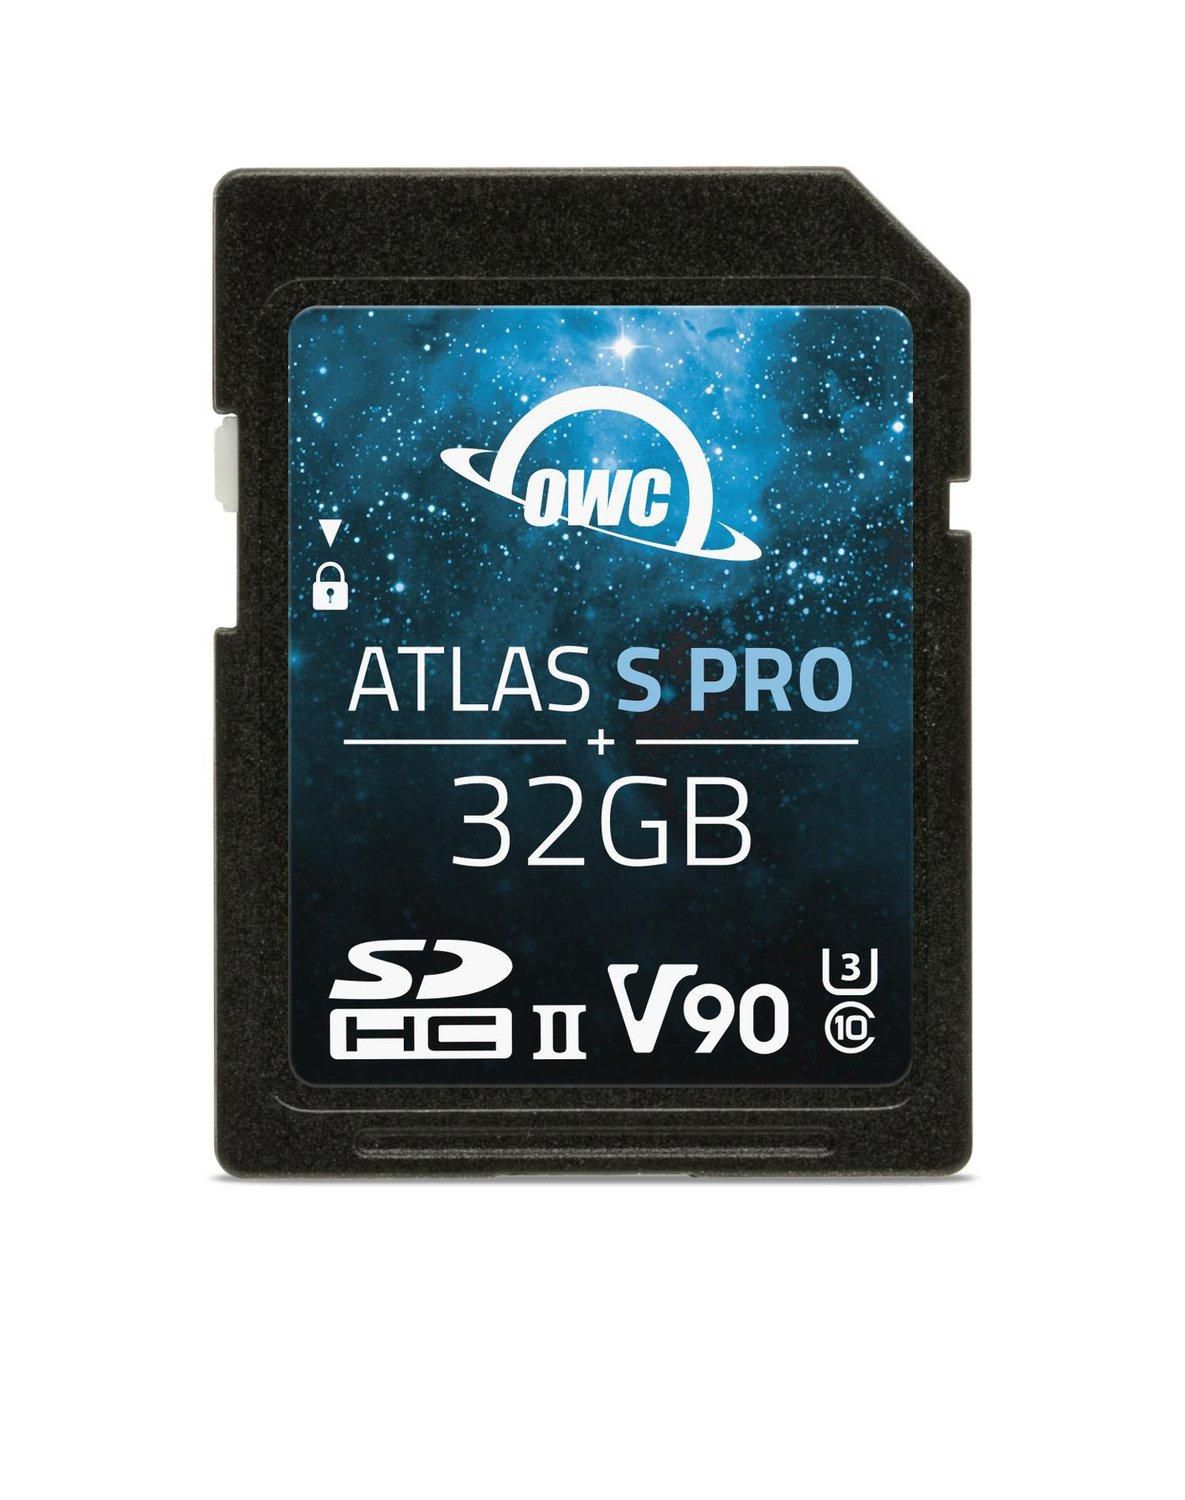 OWCSDV90P0032 W127153716 32GB Atlas S Pro SDHC UHS-II 